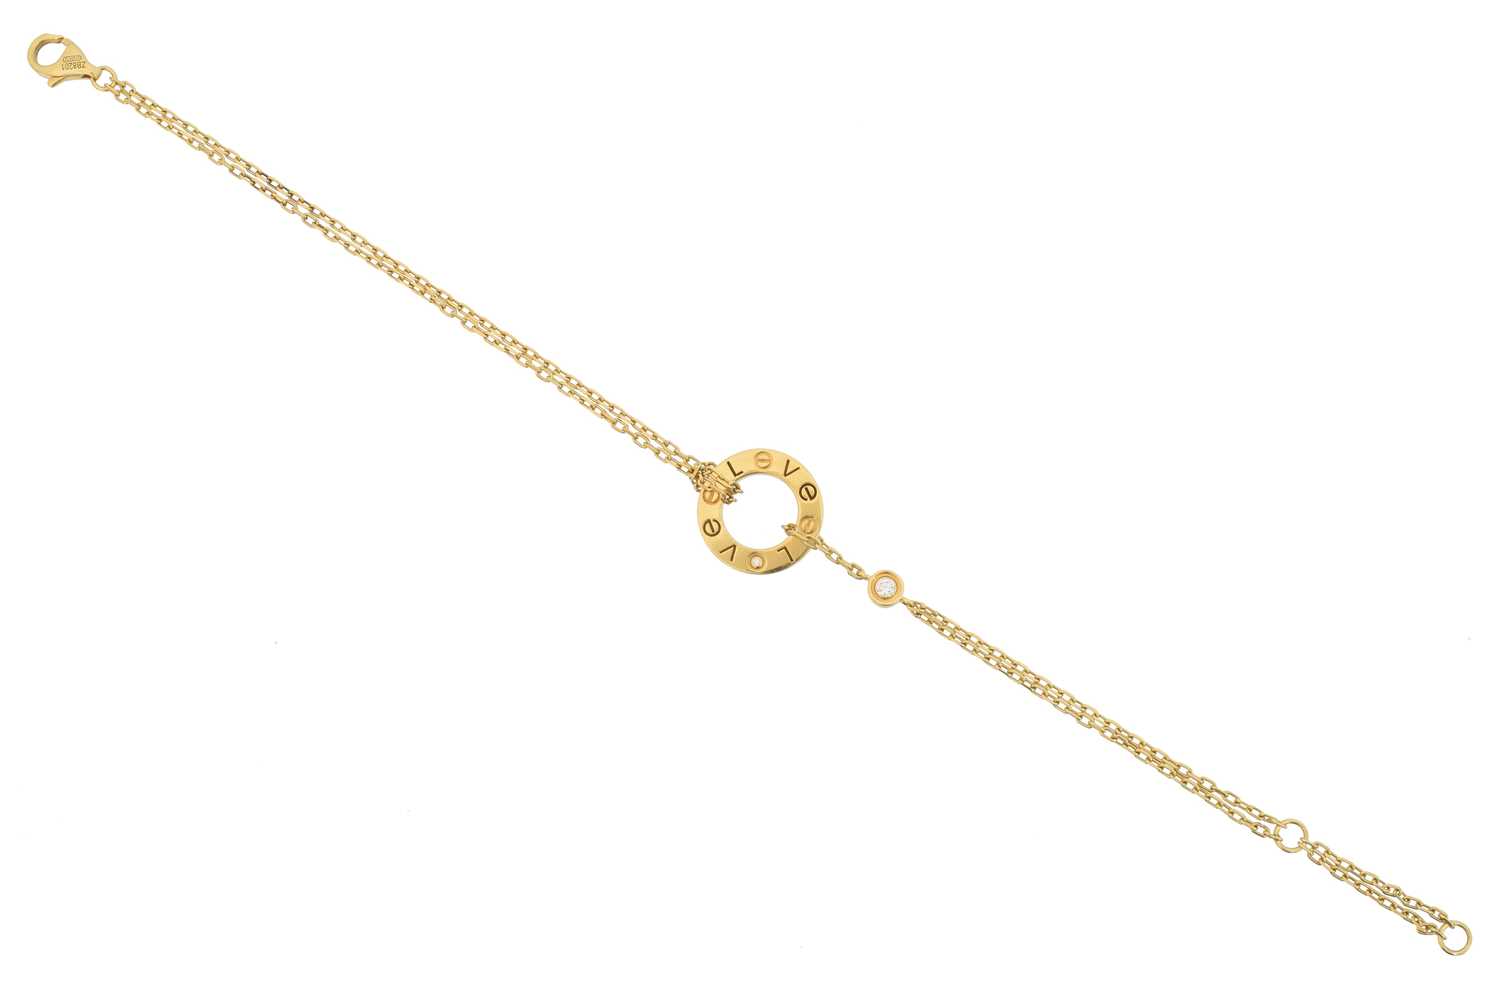 49 - An 18ct gold diamond 'Love' bracelet by Cartier,